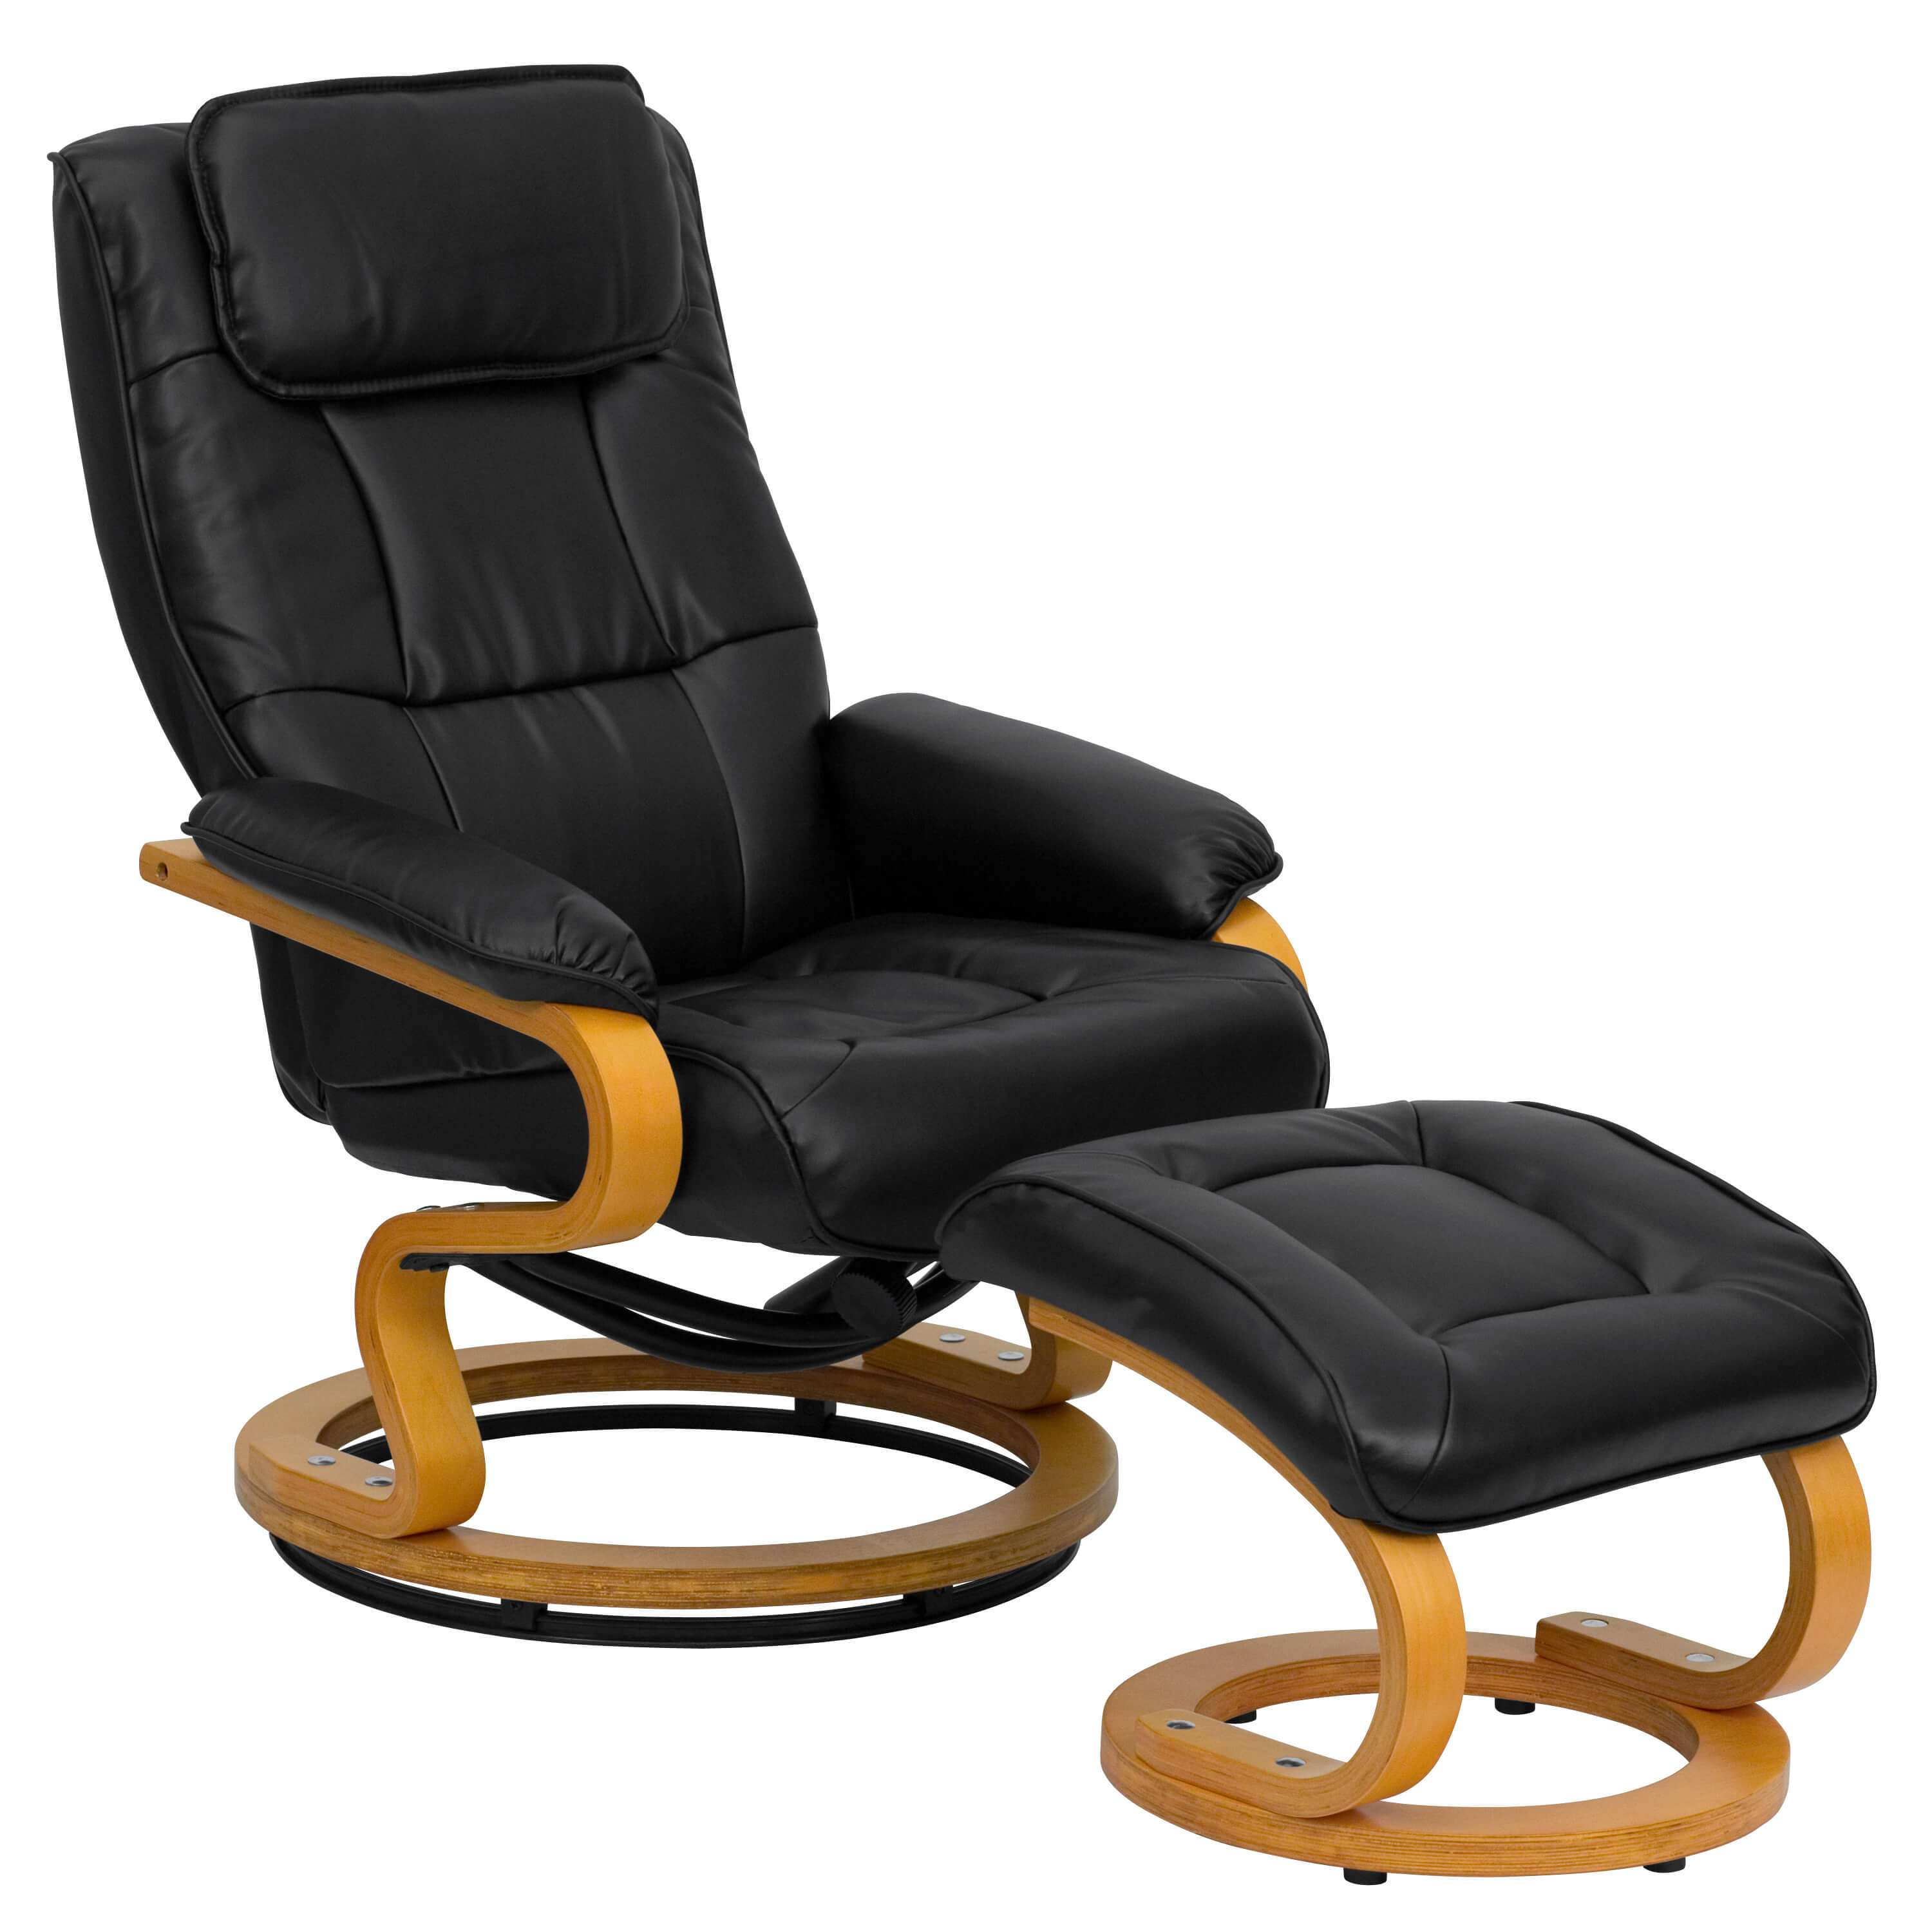 contemporary-recliners-high-back-recliner-chair.jpg